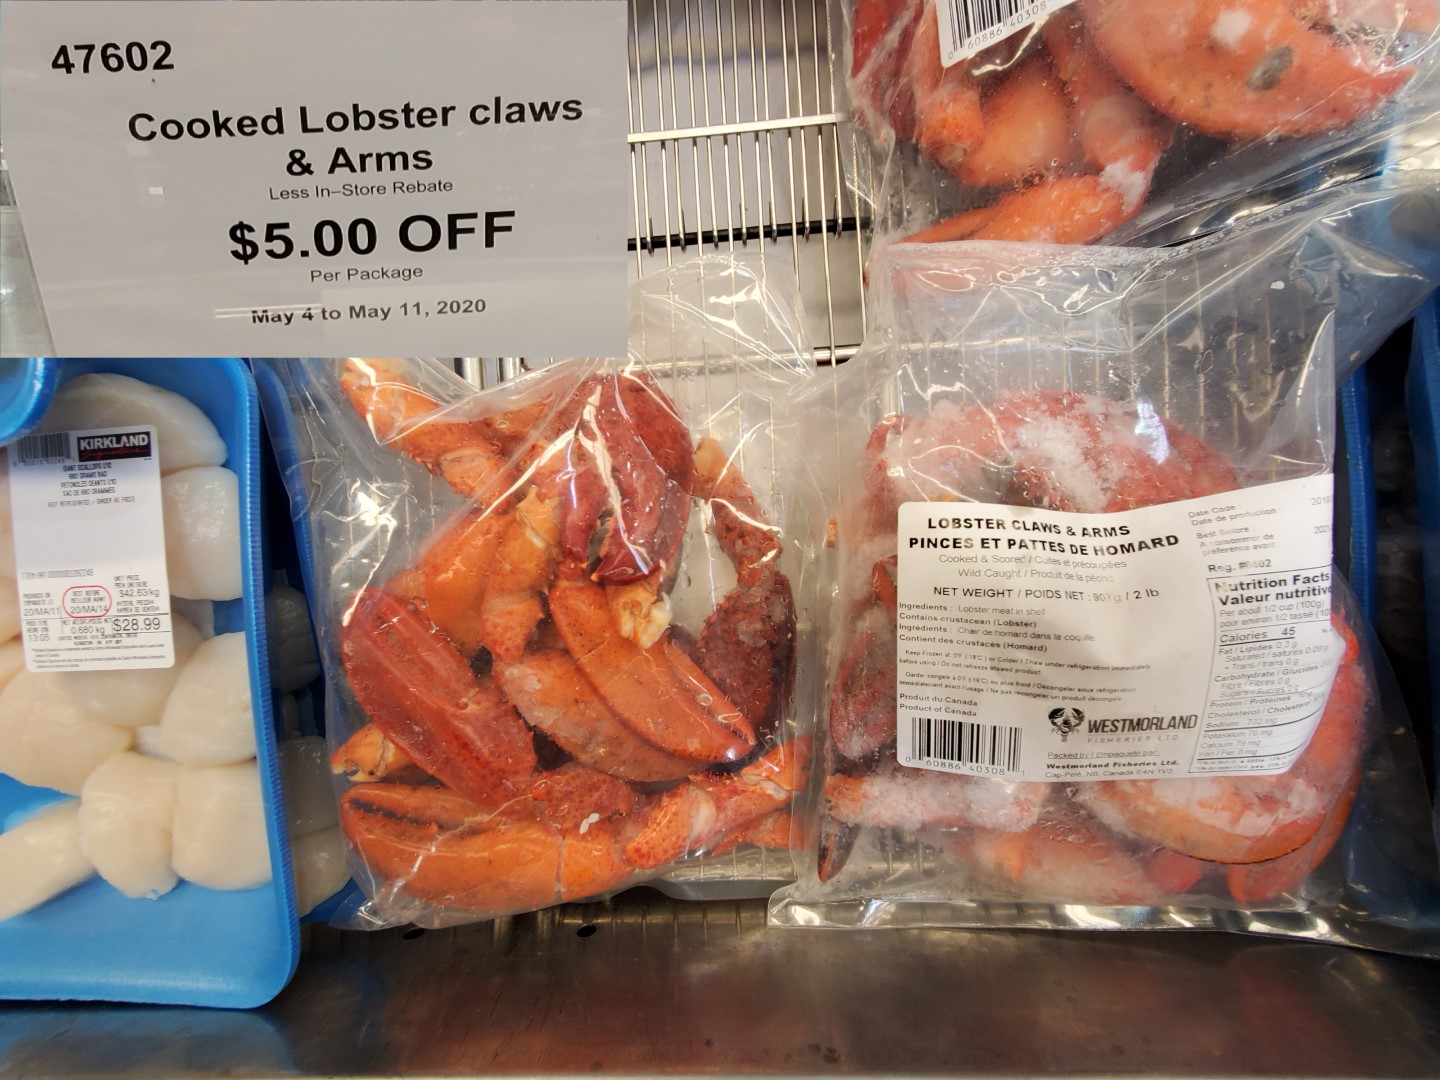 Costco seafood dept sales